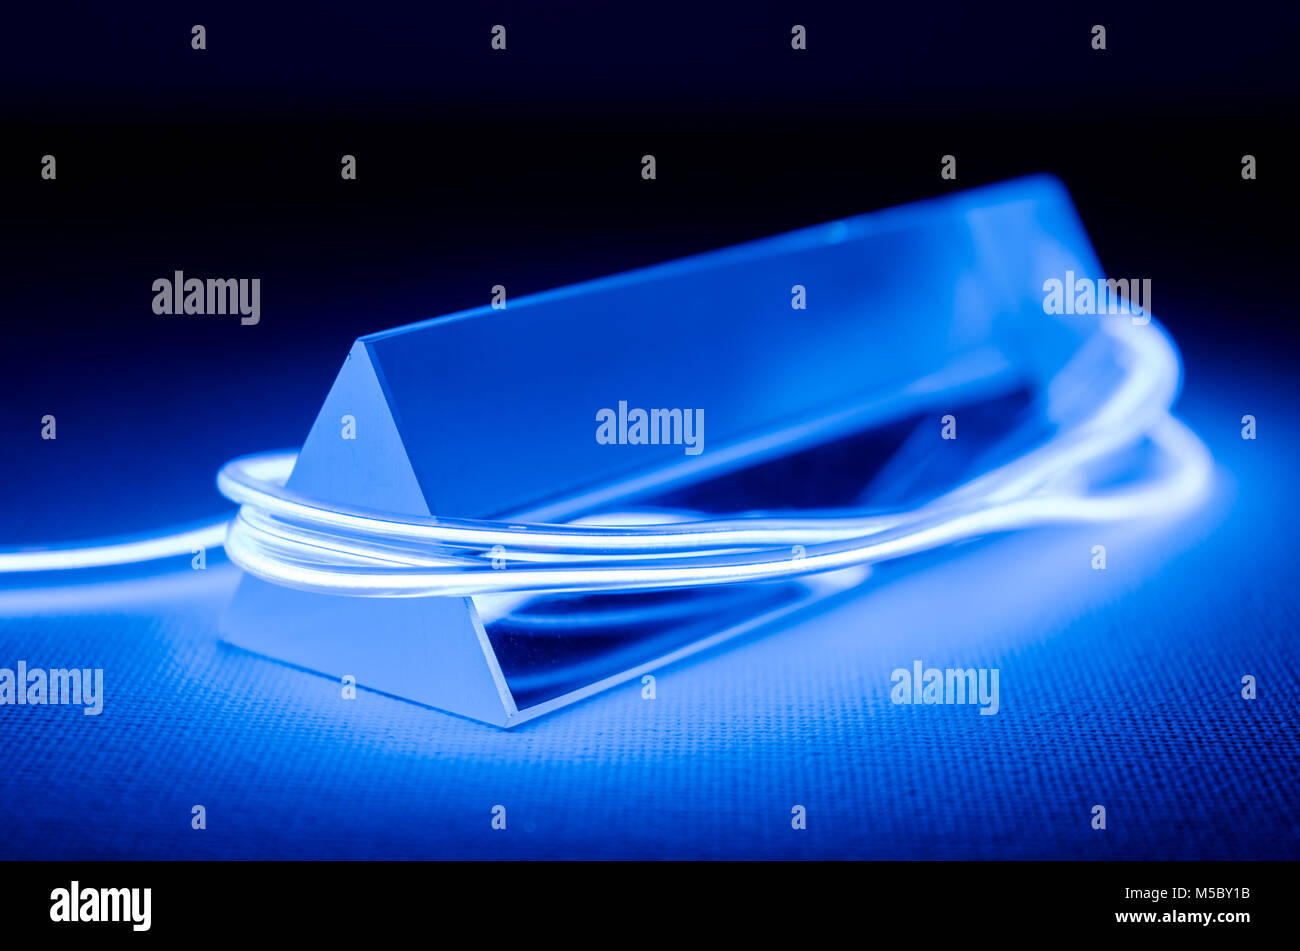 Un estudio bodegón fotografía de un prisma de vidrio triangular con iluminación de neón abstractos en azul Foto de stock